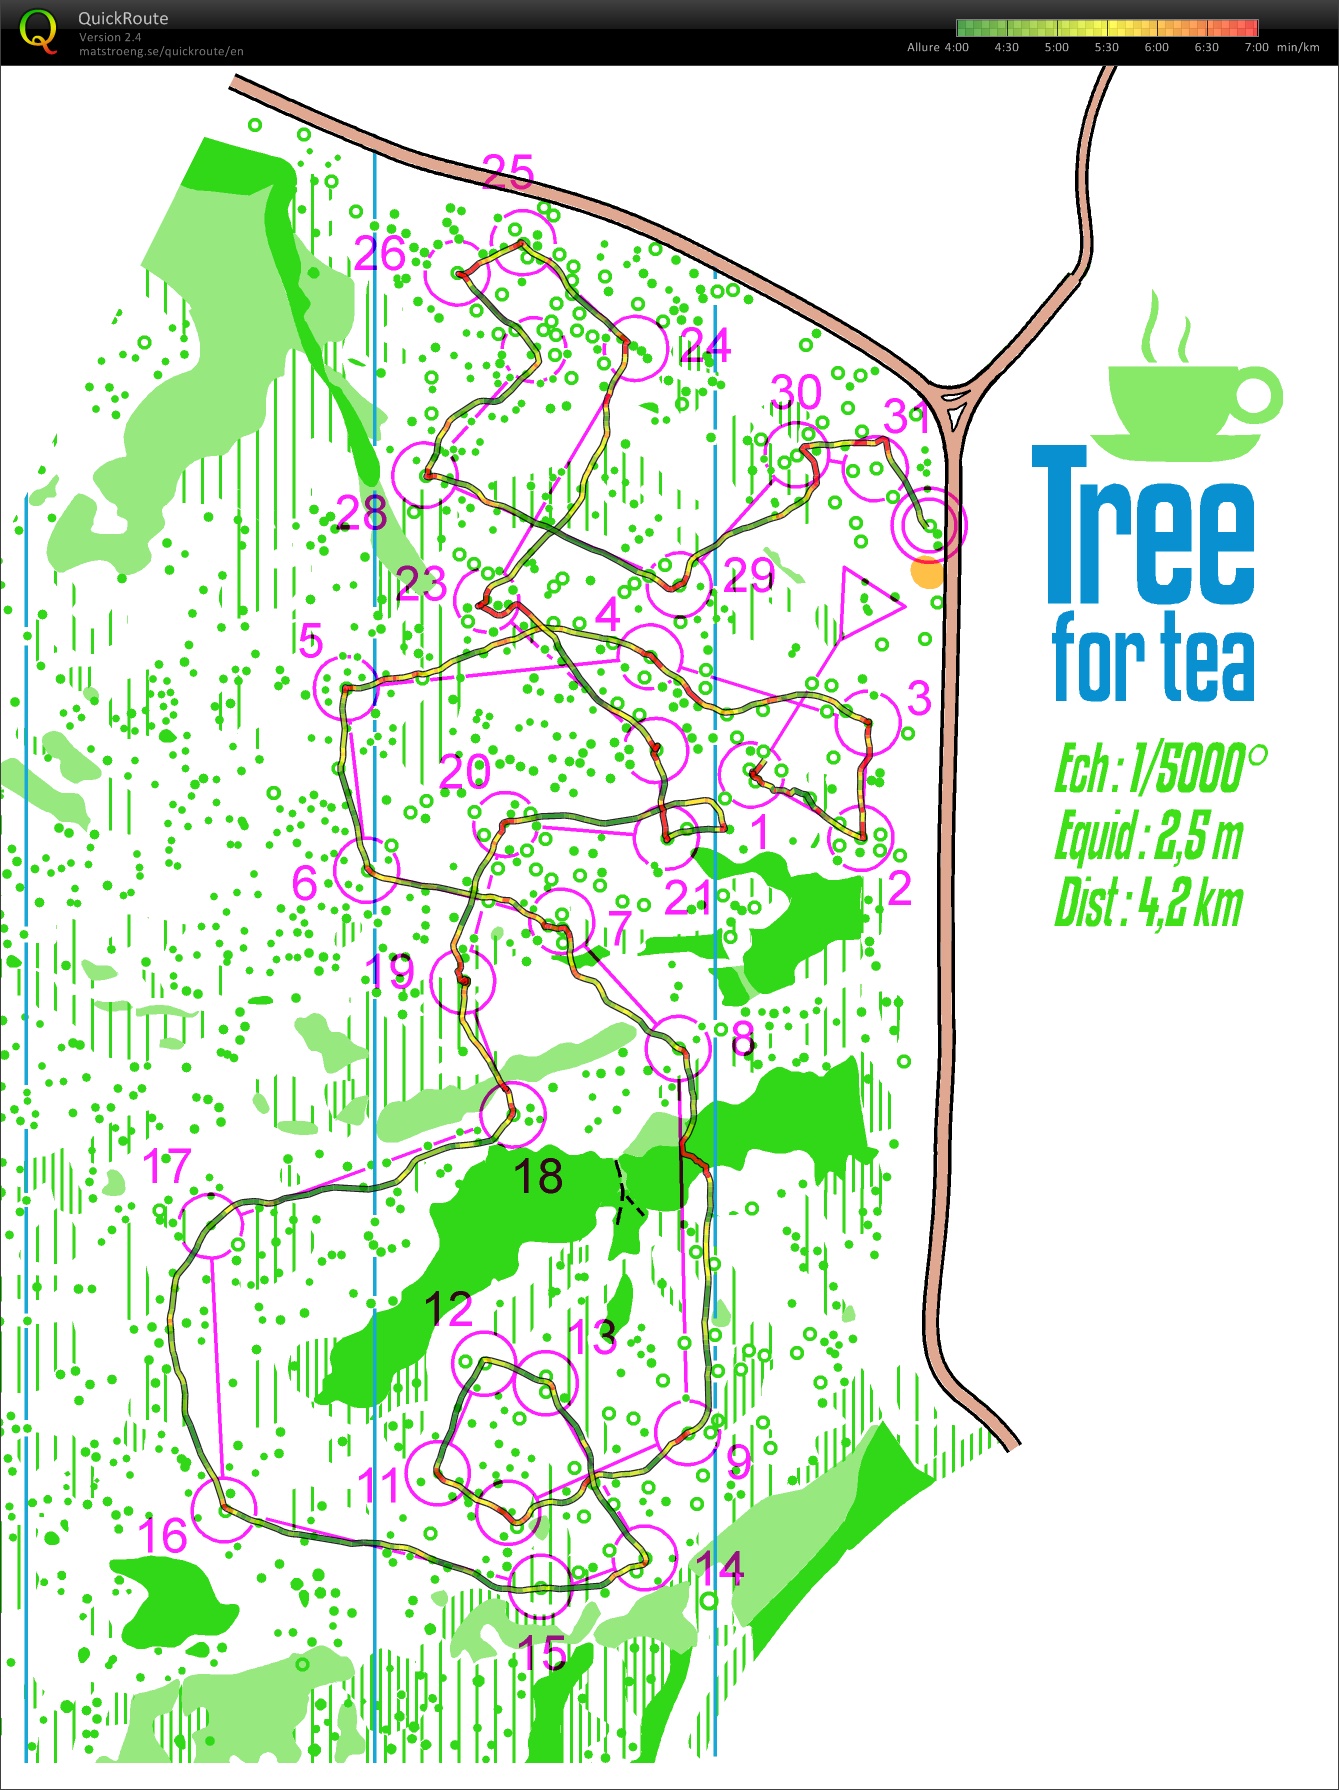 Tree for tea (2016-01-16)